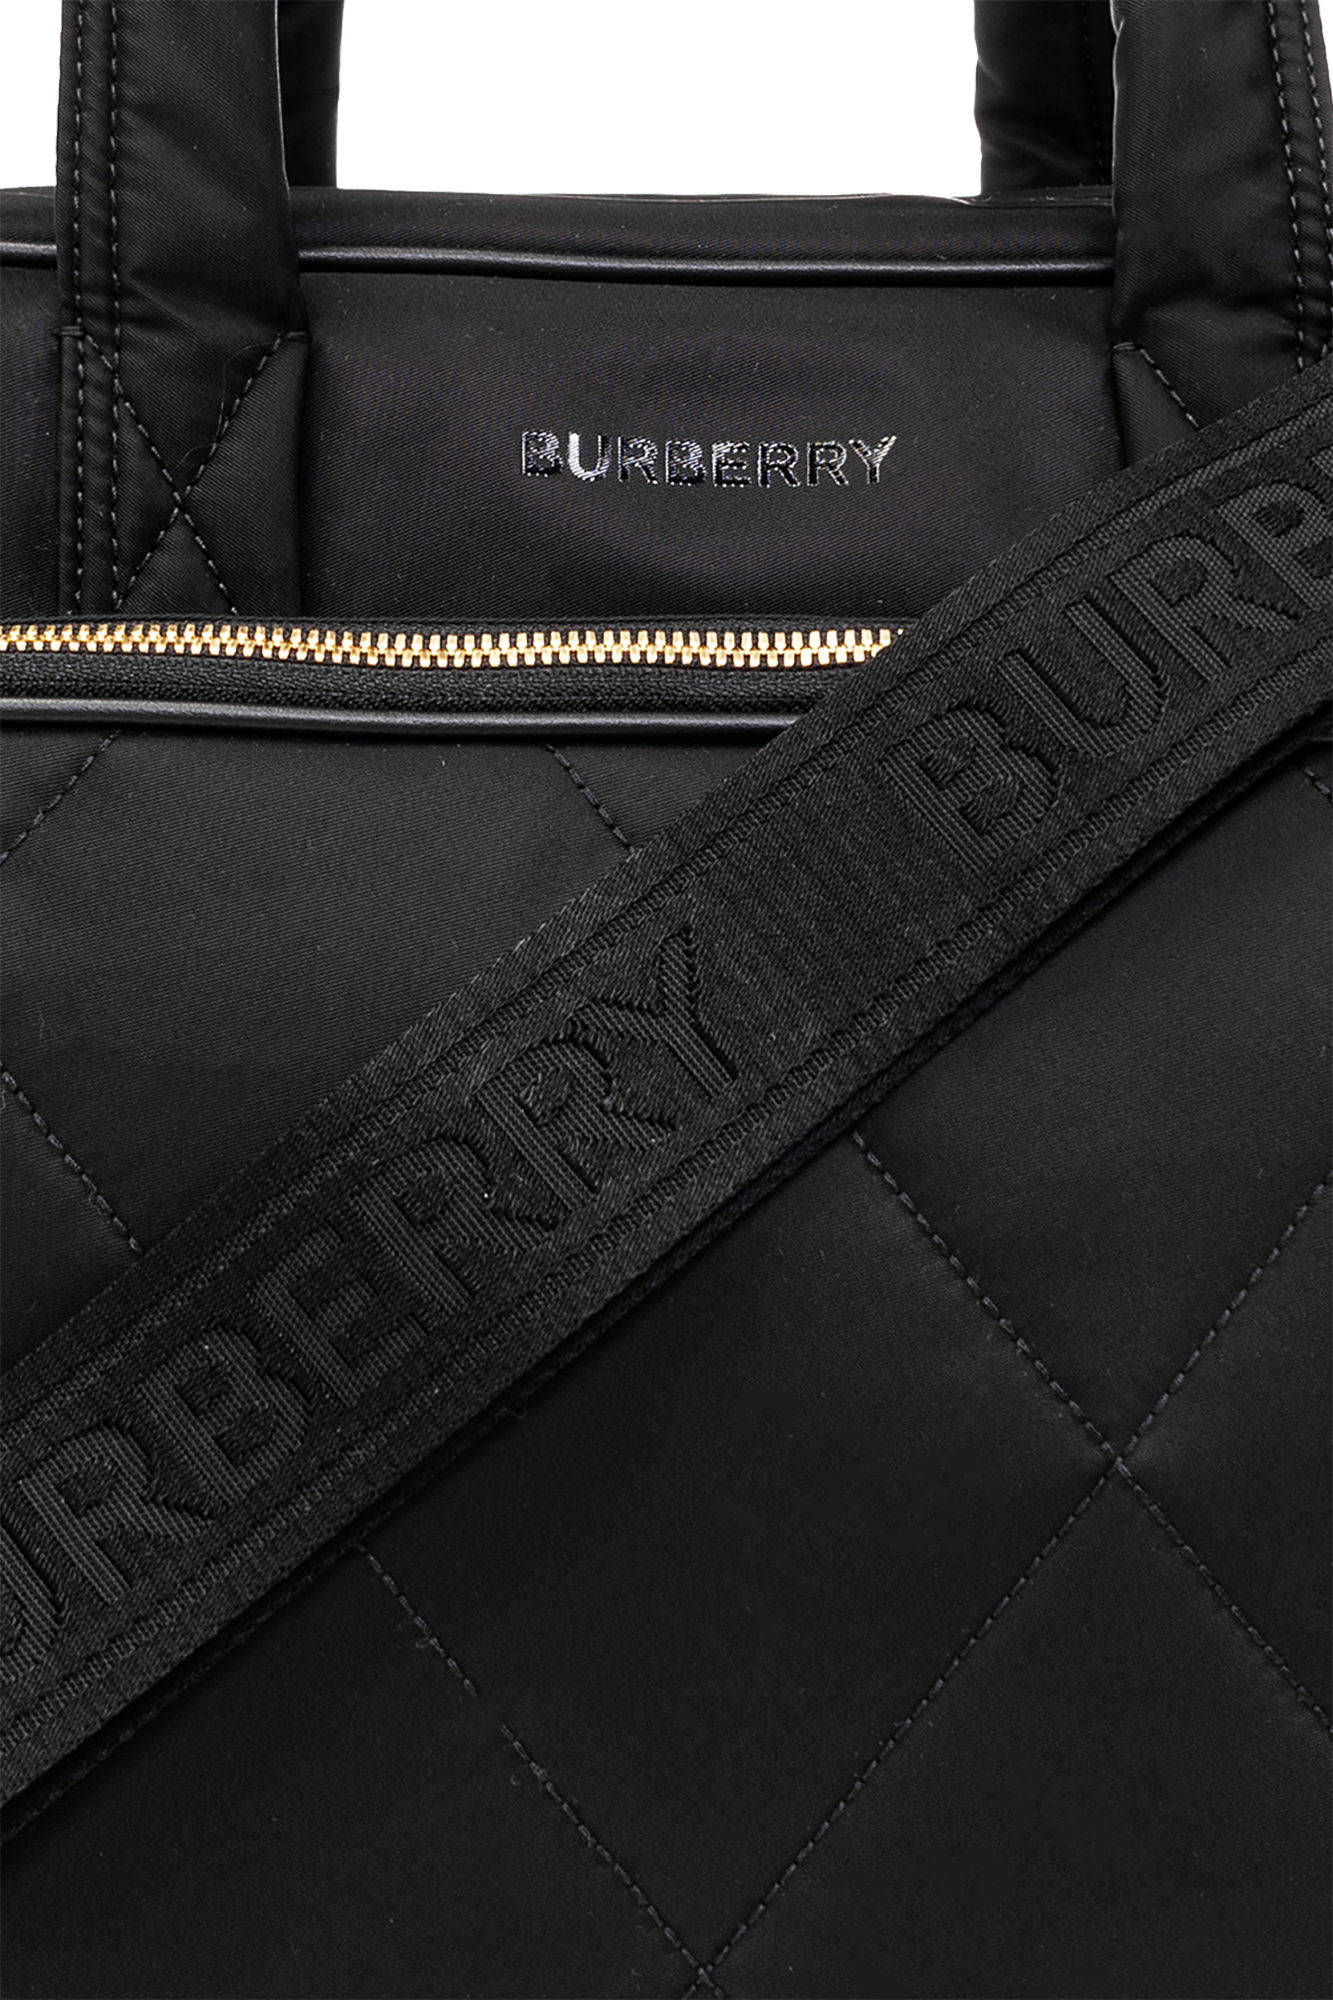 Burberry Kids Black Diaper Bag